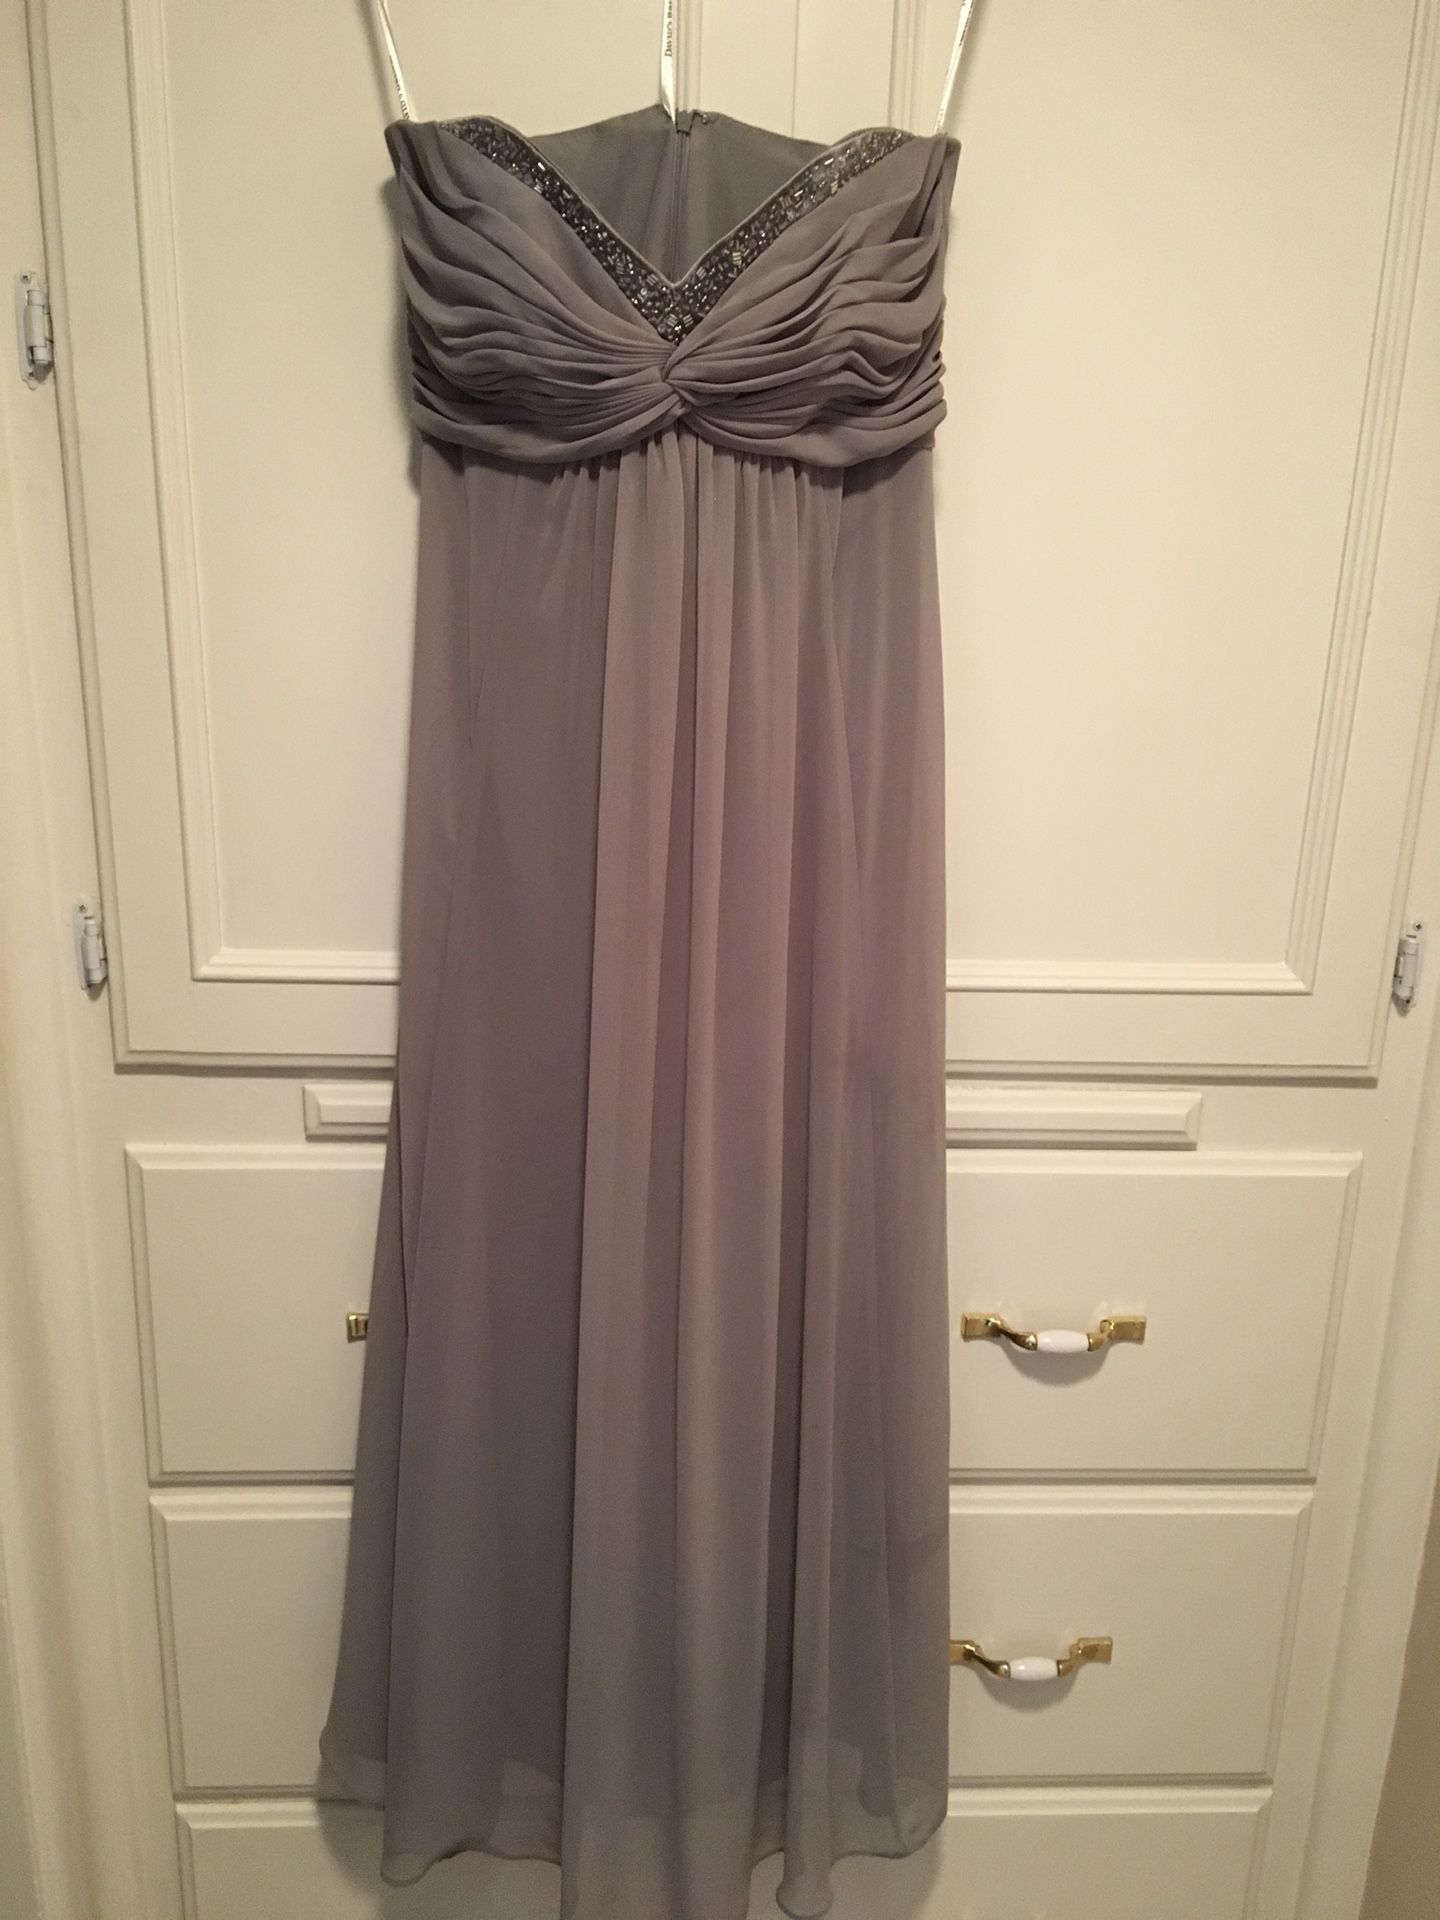 Teenager/woman’s lavender chiffon strapless dress/jeweled neckline size 4/6